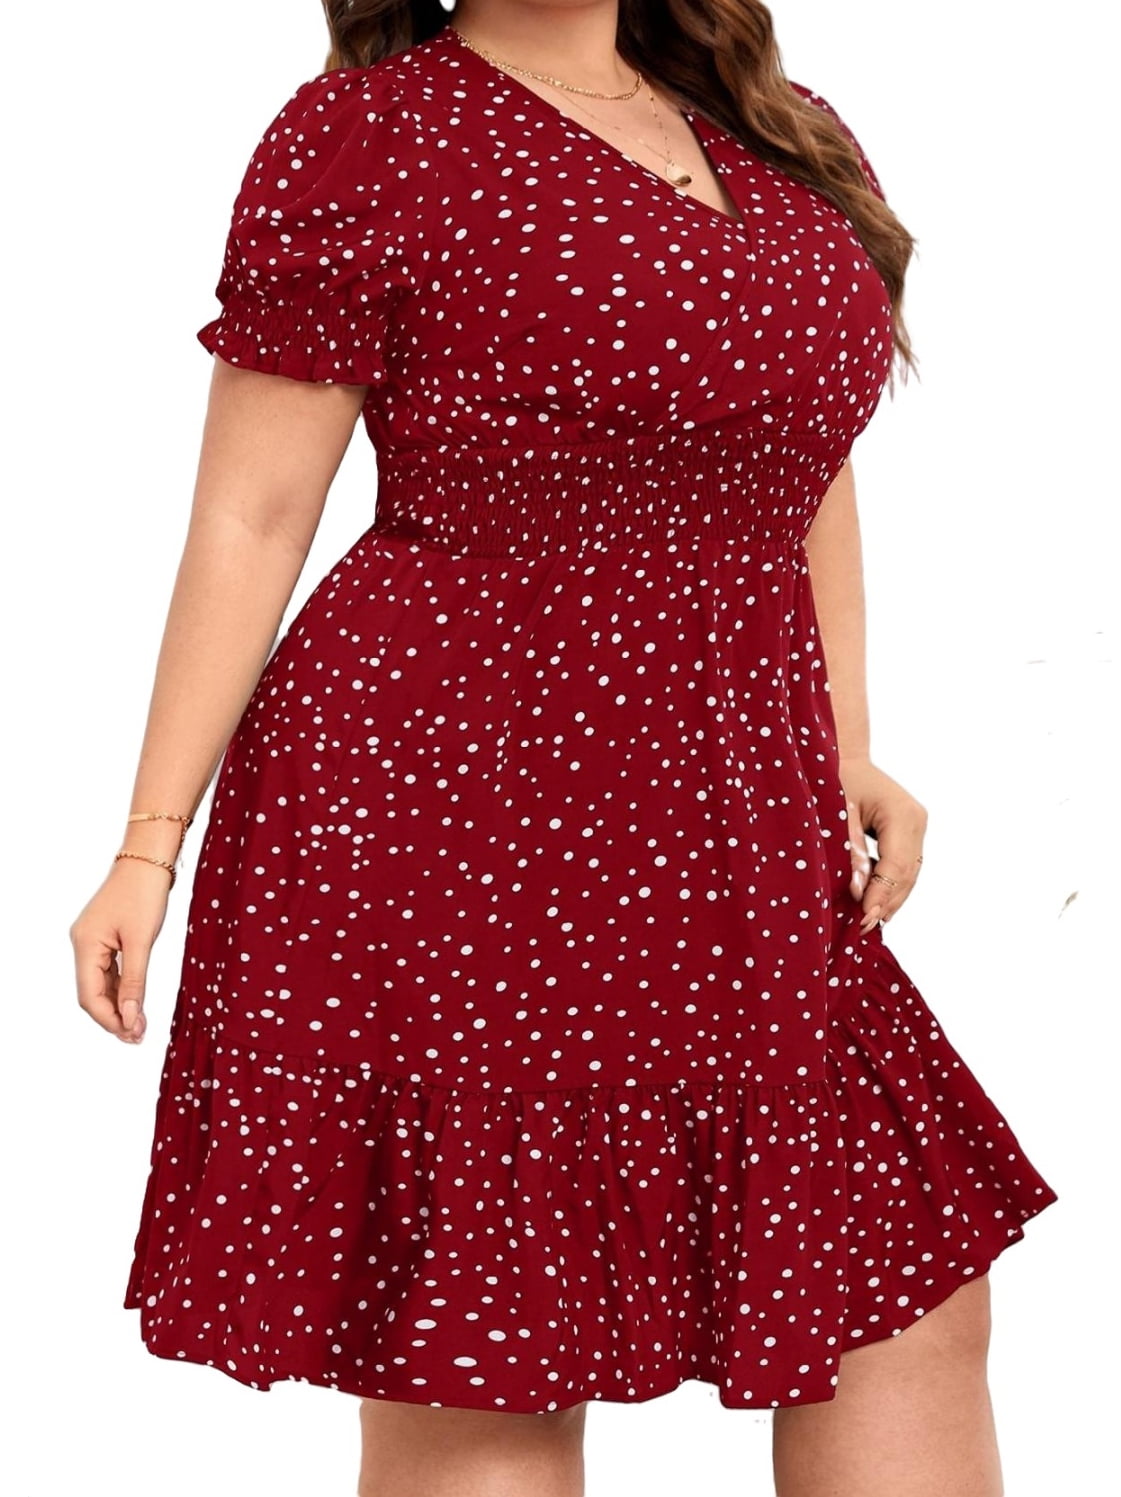 Asos Womens Dress Burgundy Polka Dots Sheath Fitted Womens US Size